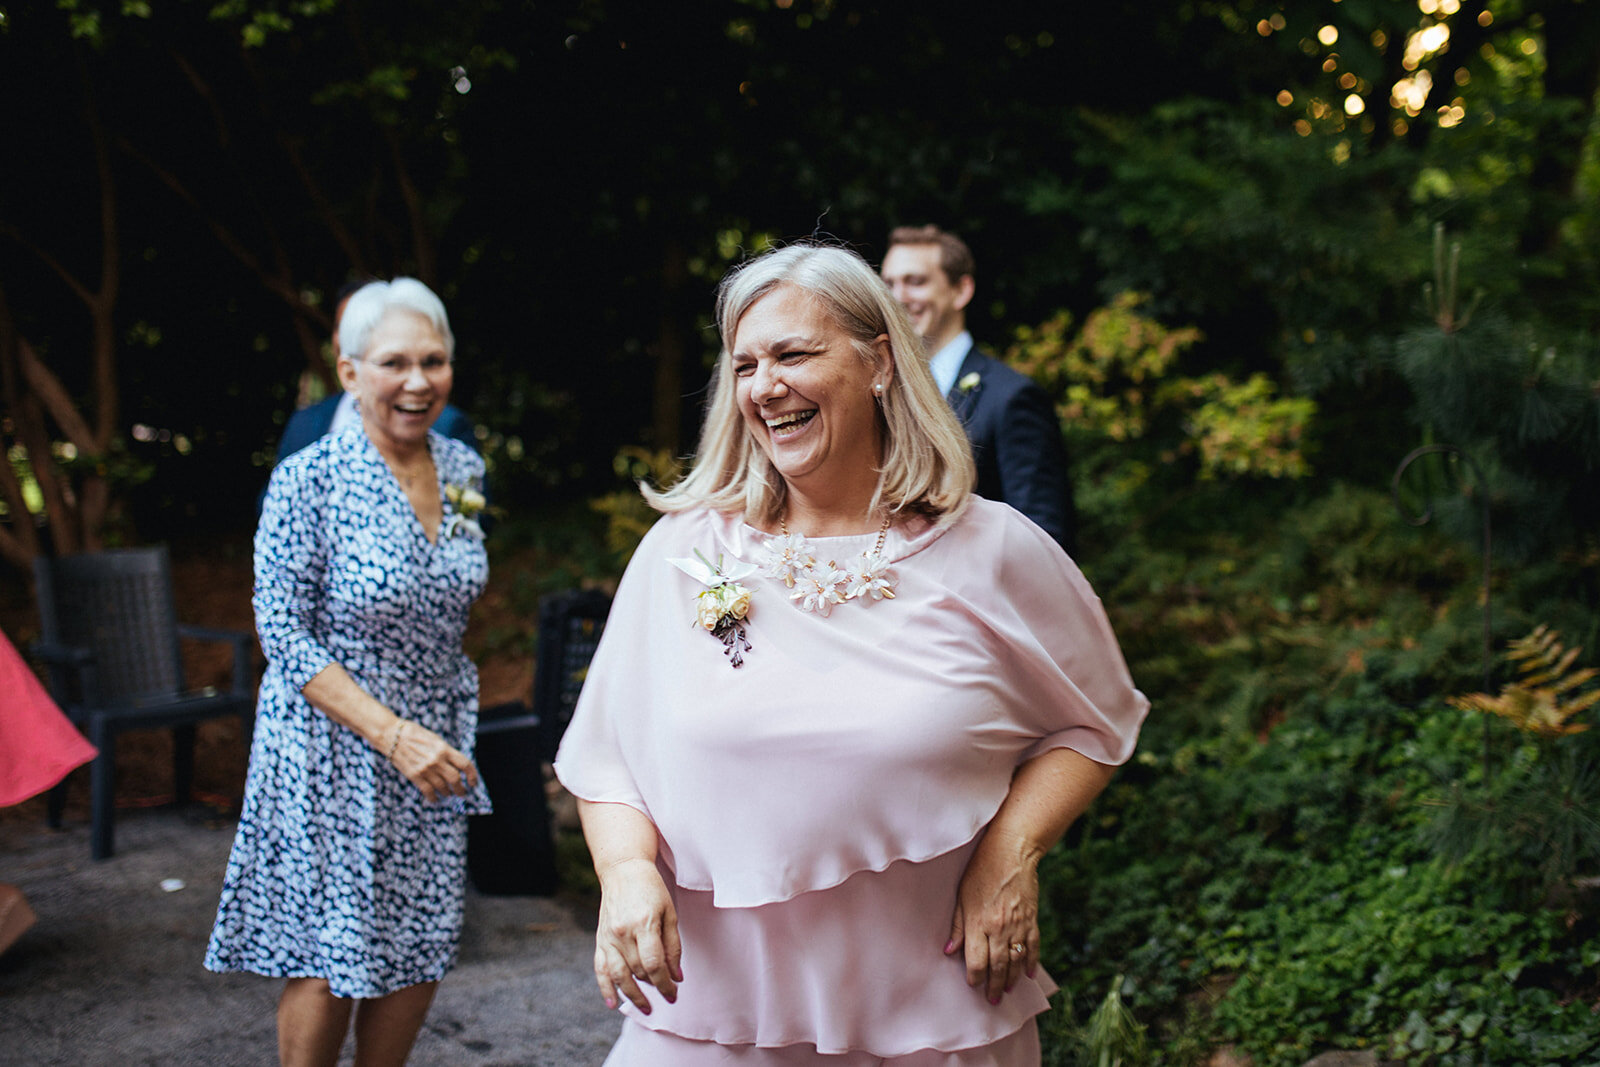 Mother of the bride mingling with guests at backyard reception in Atlanta GA Shawnee Custalow